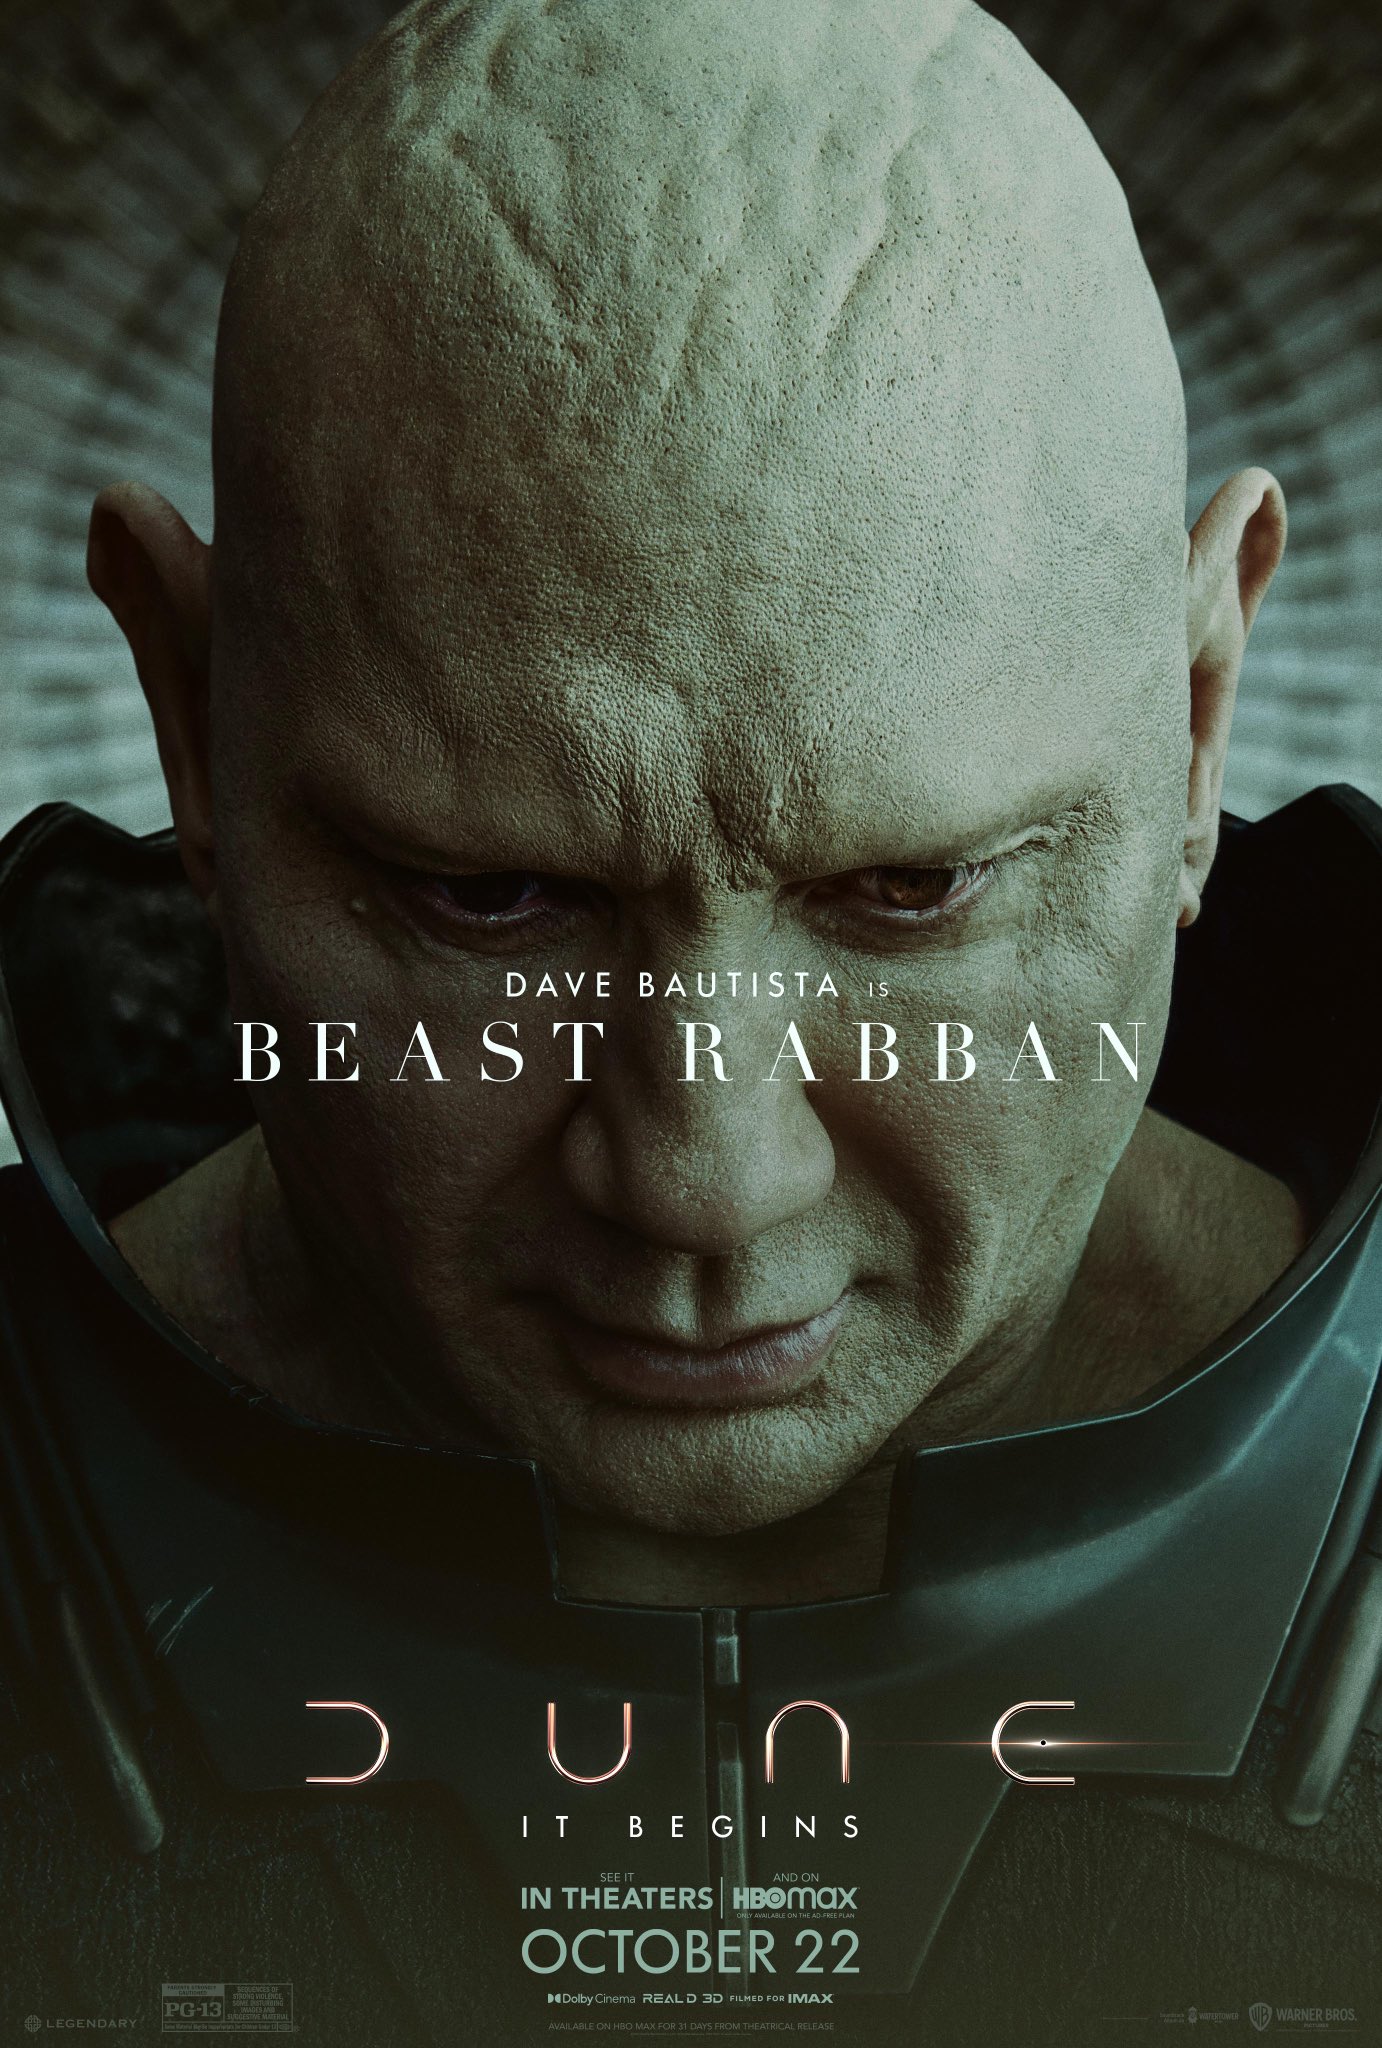 Dave Bautista is Beast Rabban